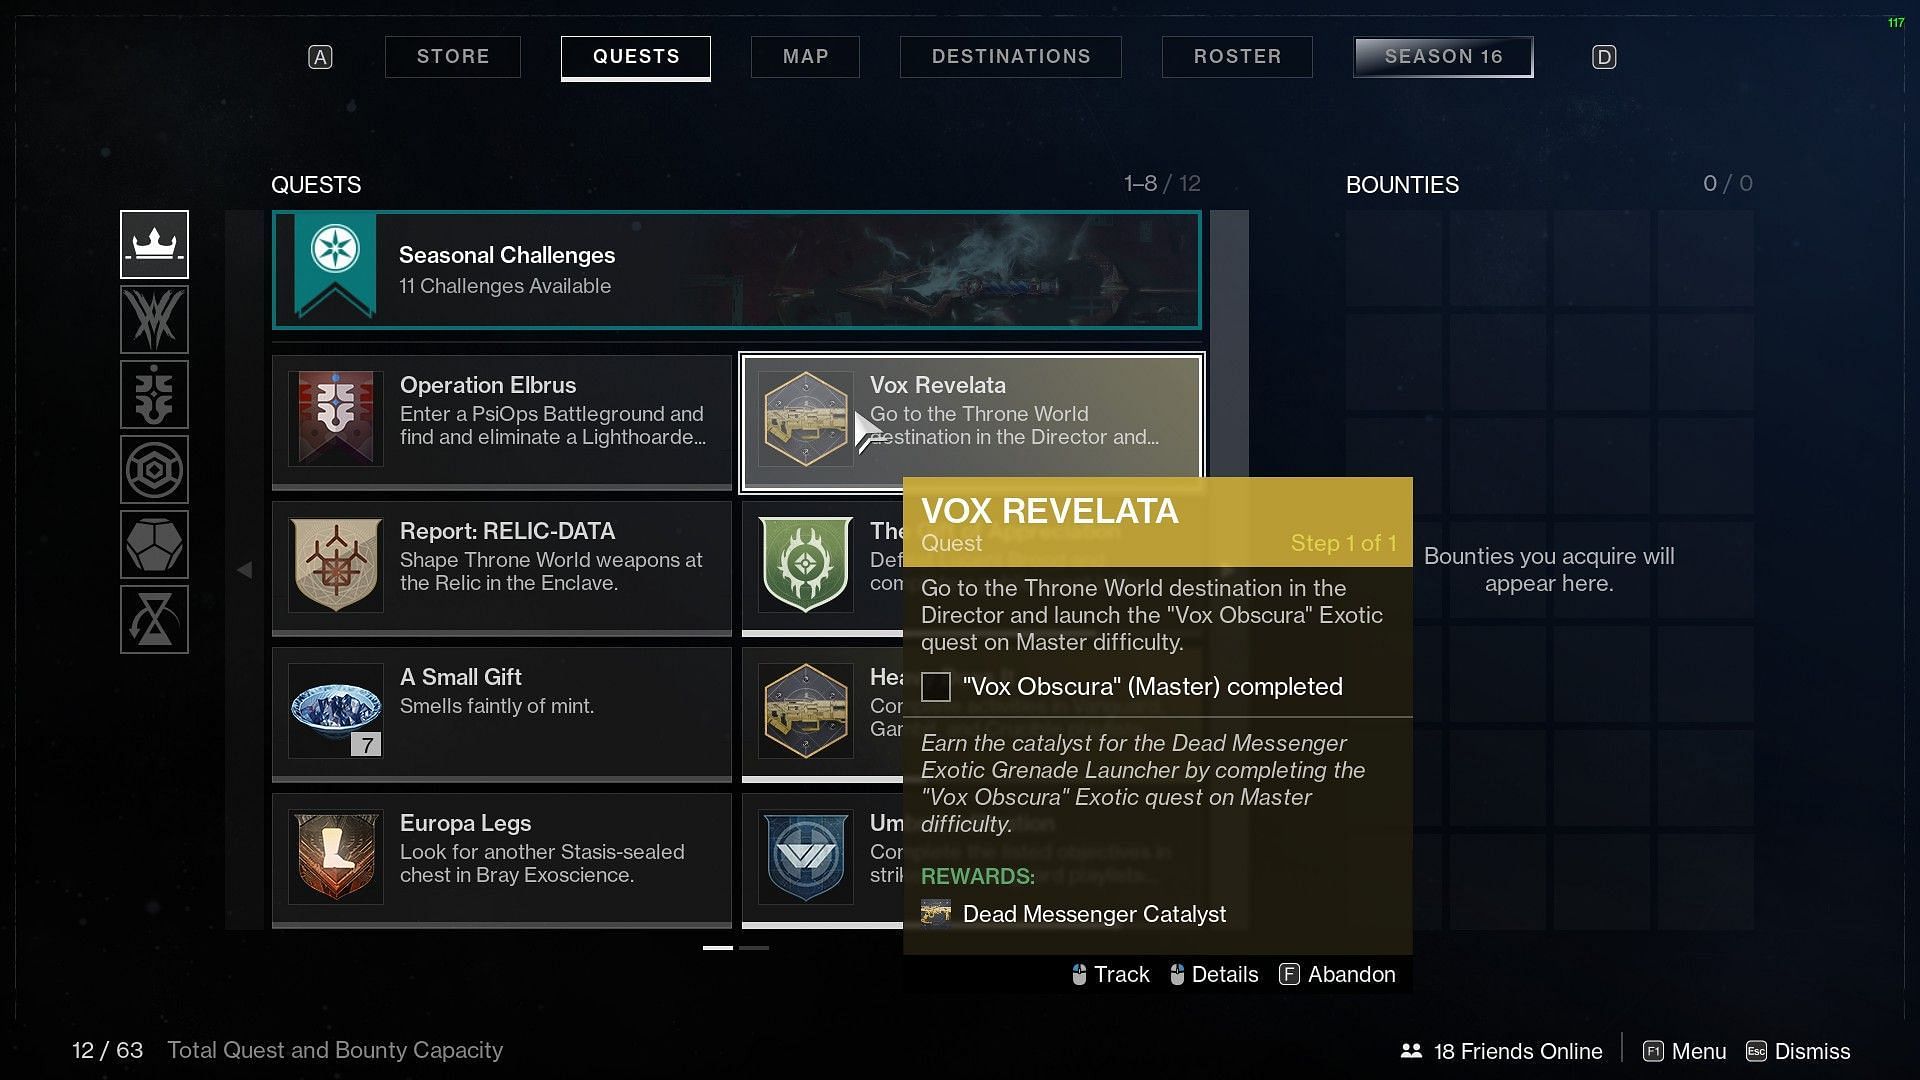 Vox Revelata questline in Destiny 2 (Image via Bungie)